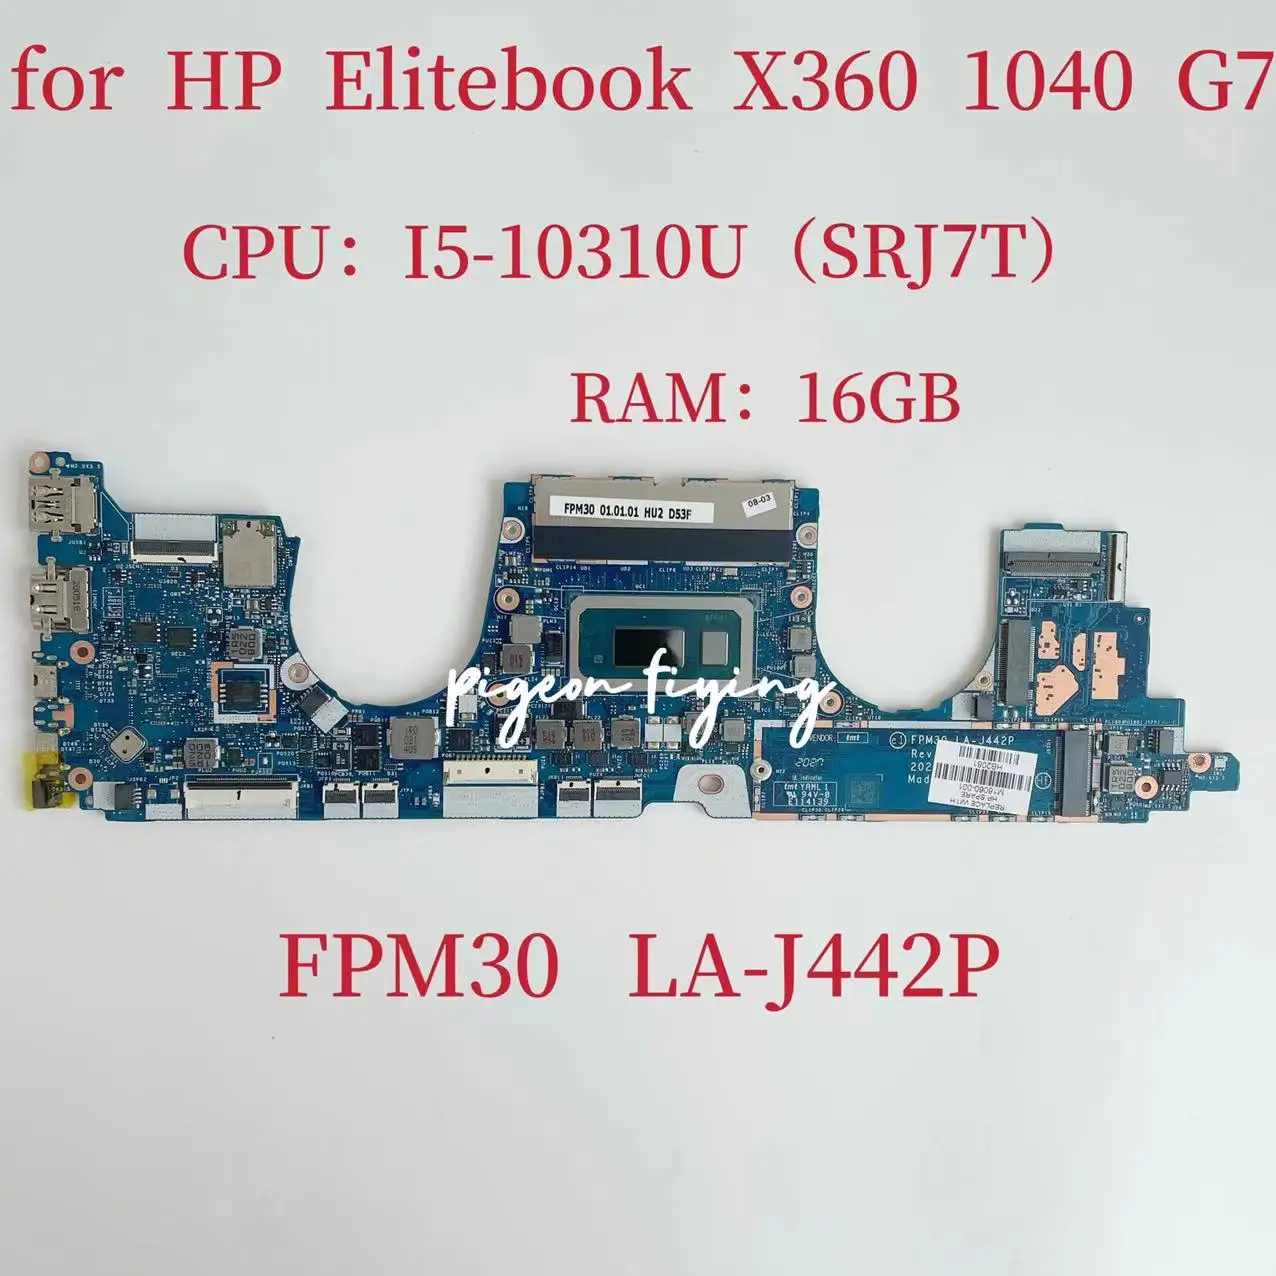 

M16060-001 Mainboard for HP EliteBook X360 1040 G7 Laptop Motherboard CPU:I5-10310U SRJ7T RAM:16GB FPM30 LA-J442P Test OK